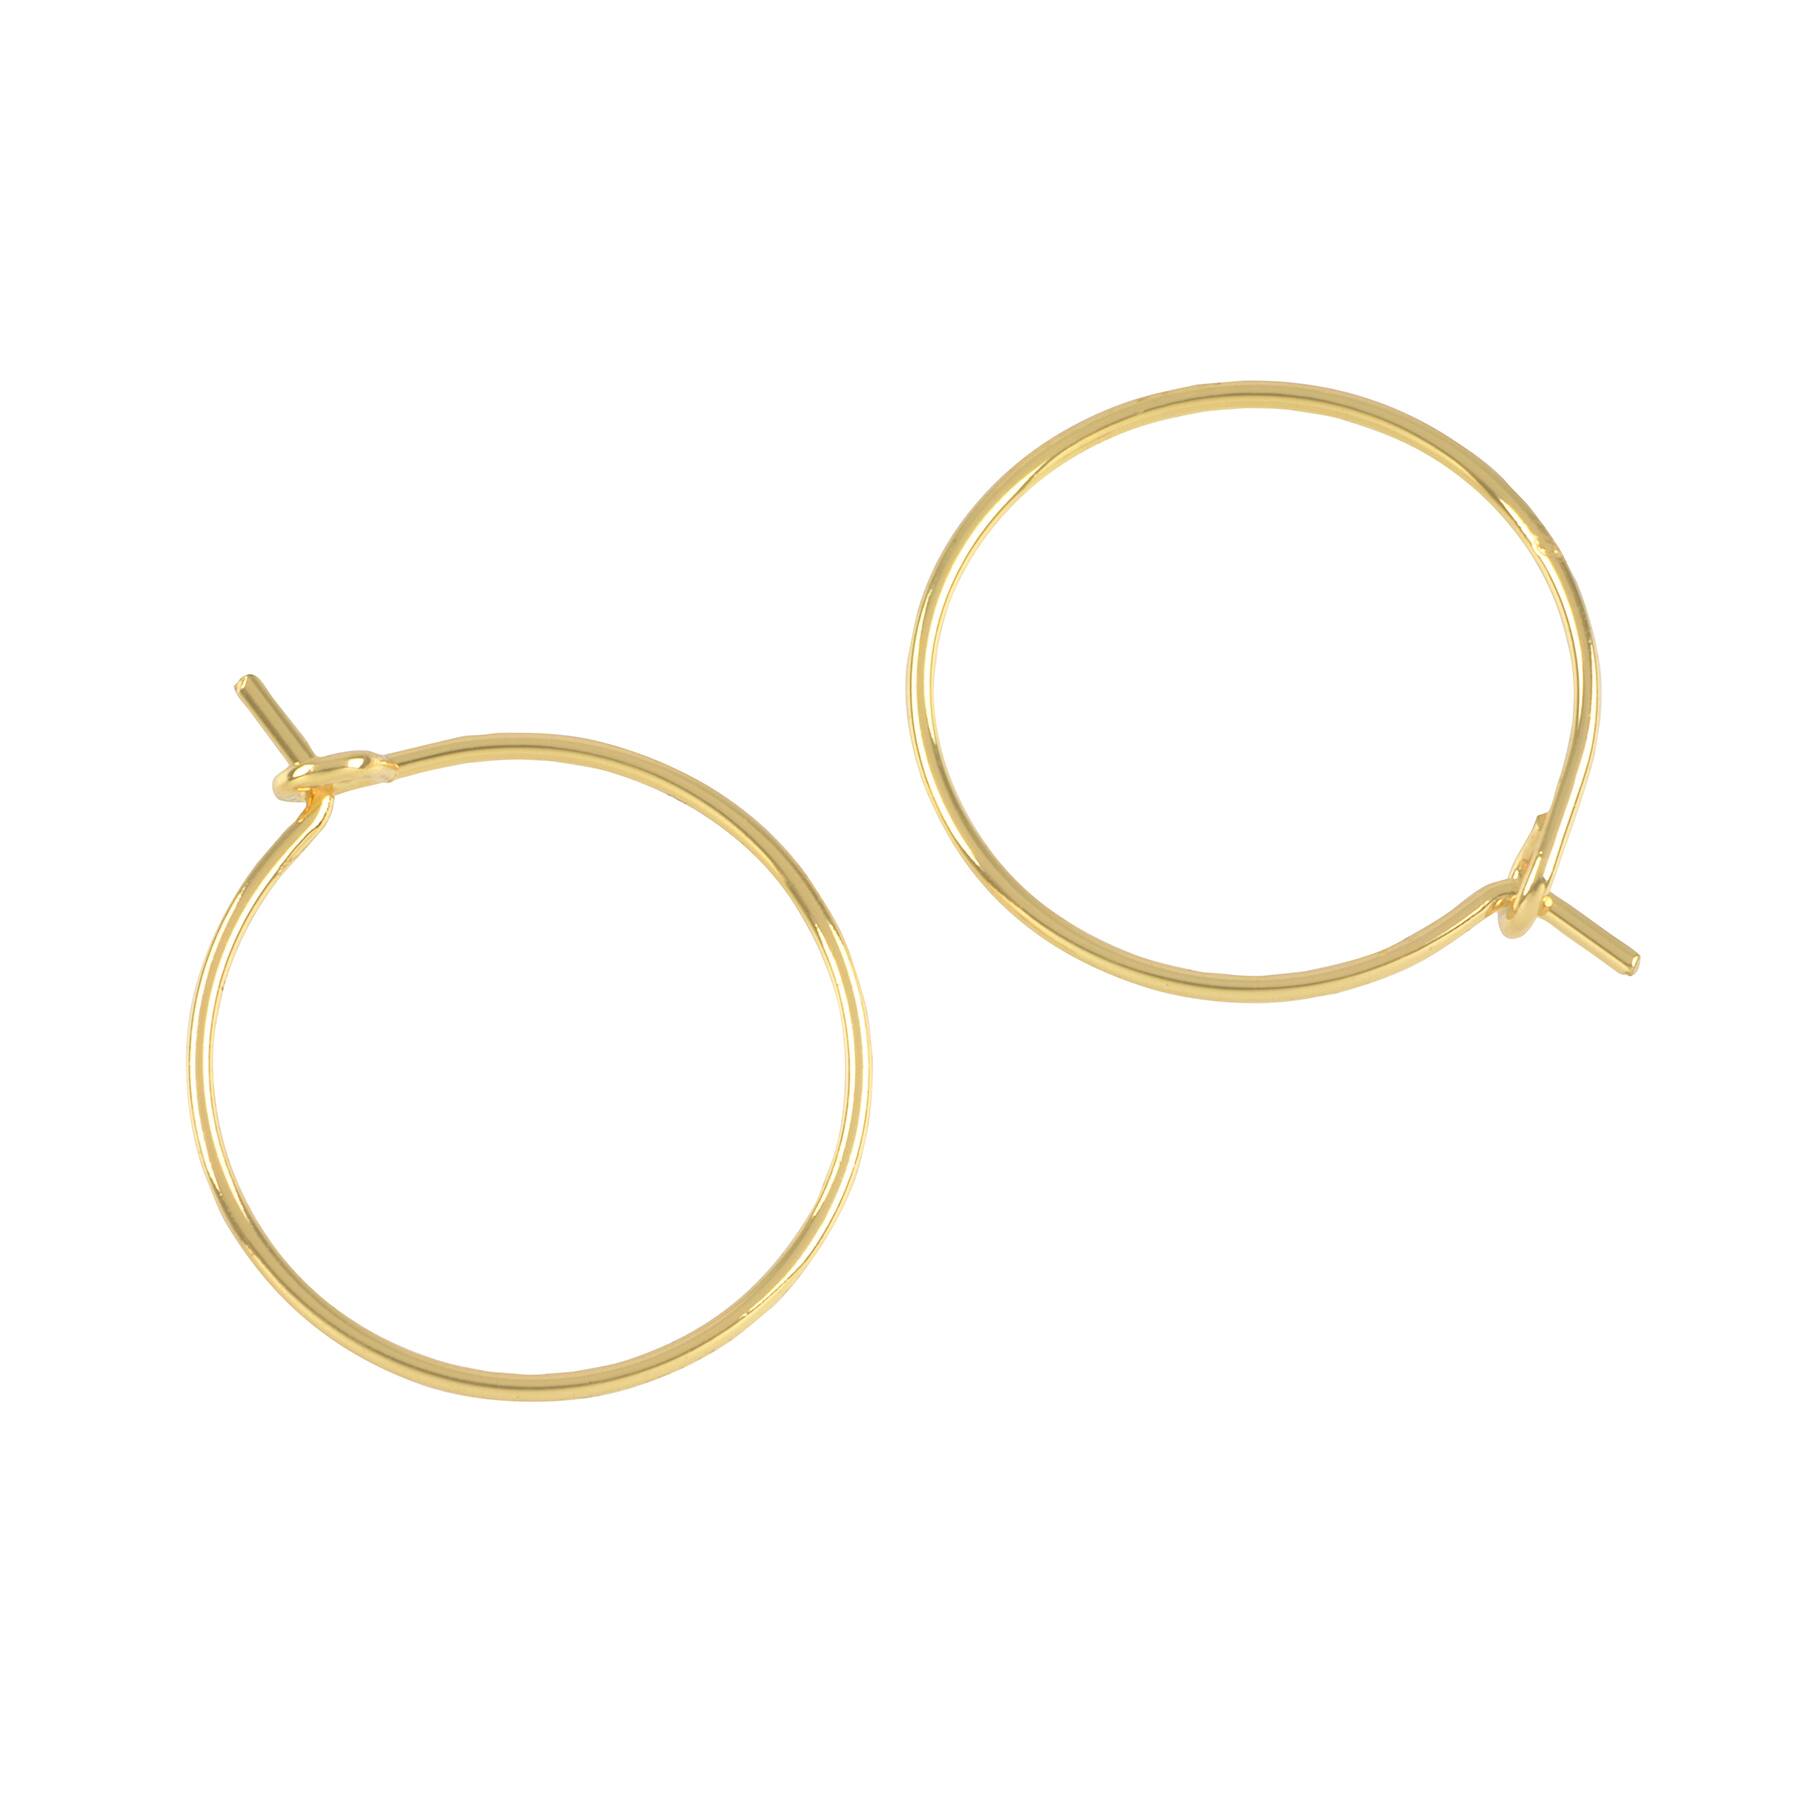 96pcs Earrings Beading Hoop Set for Jewelry Making,Earring Finding Triangle Teardrop Round Beading Hoop Earrings Bulk with 200pcs Earring Hooks Hoops